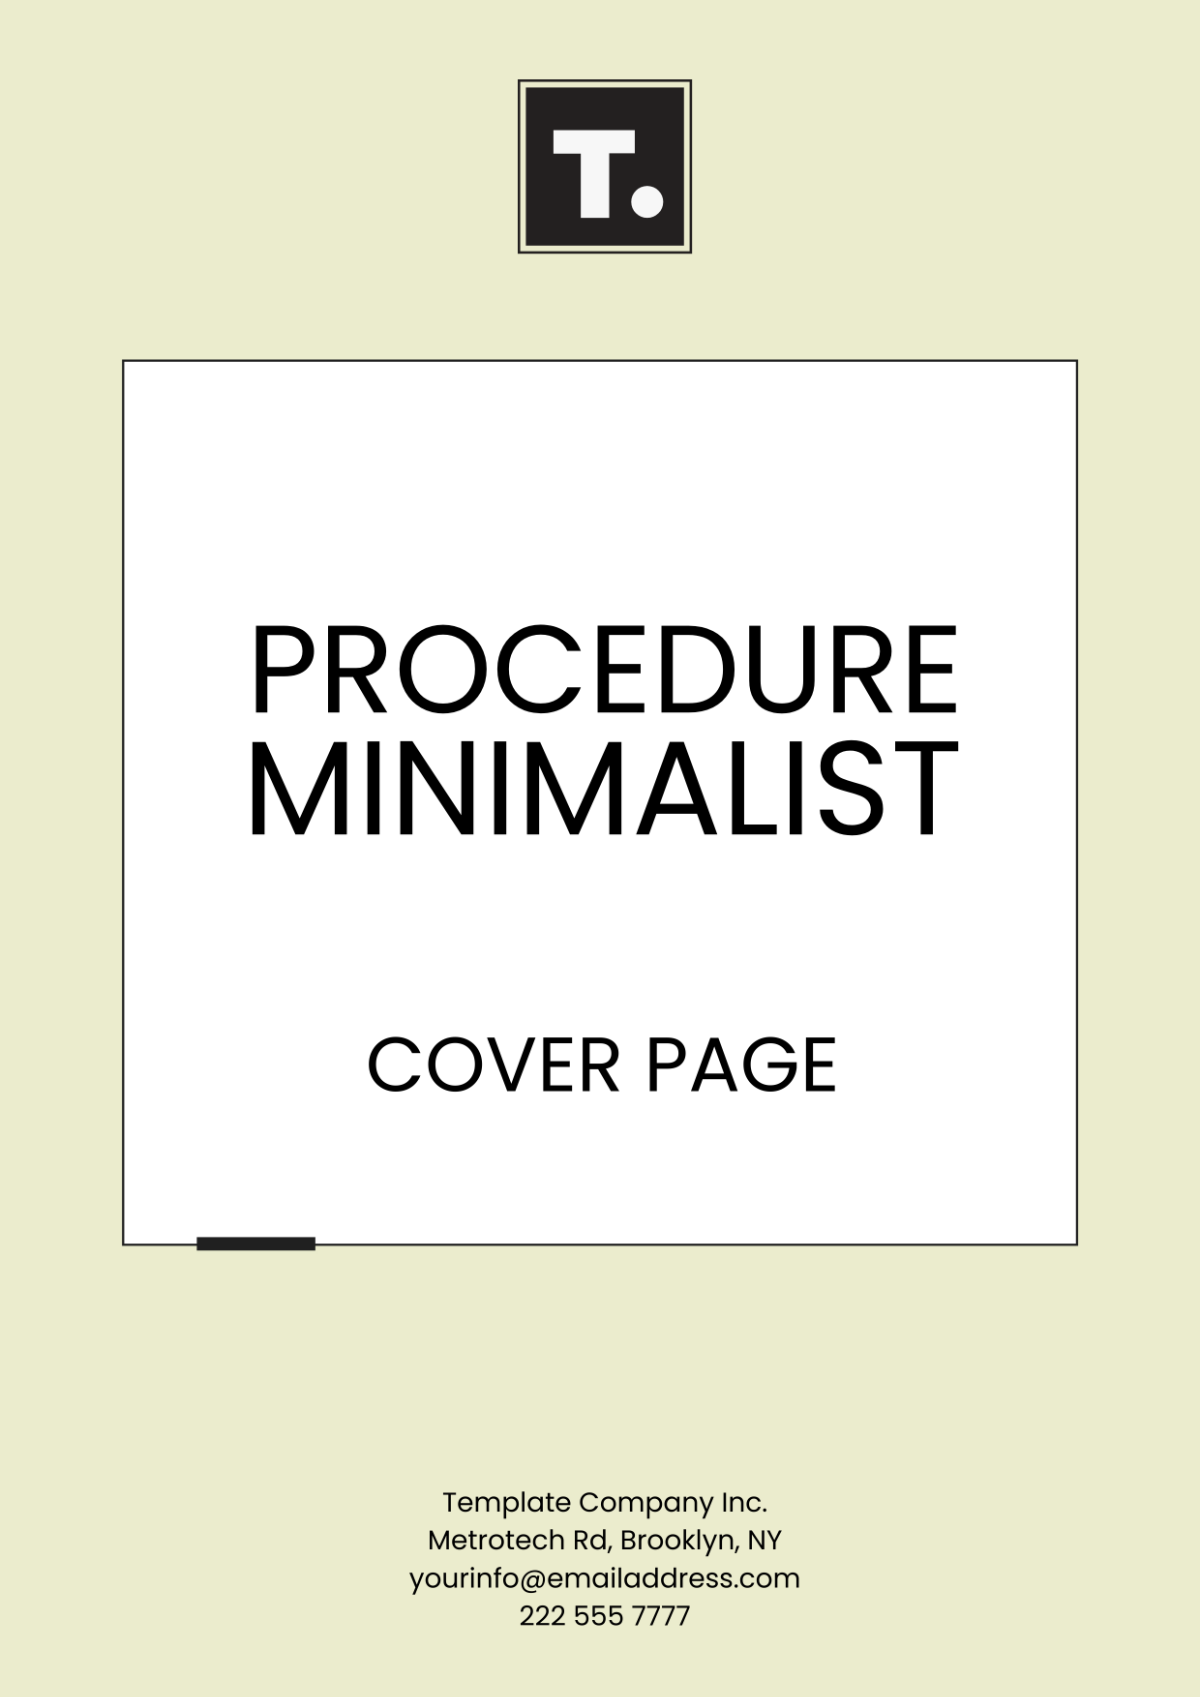 Procedure Minimalist Cover Page